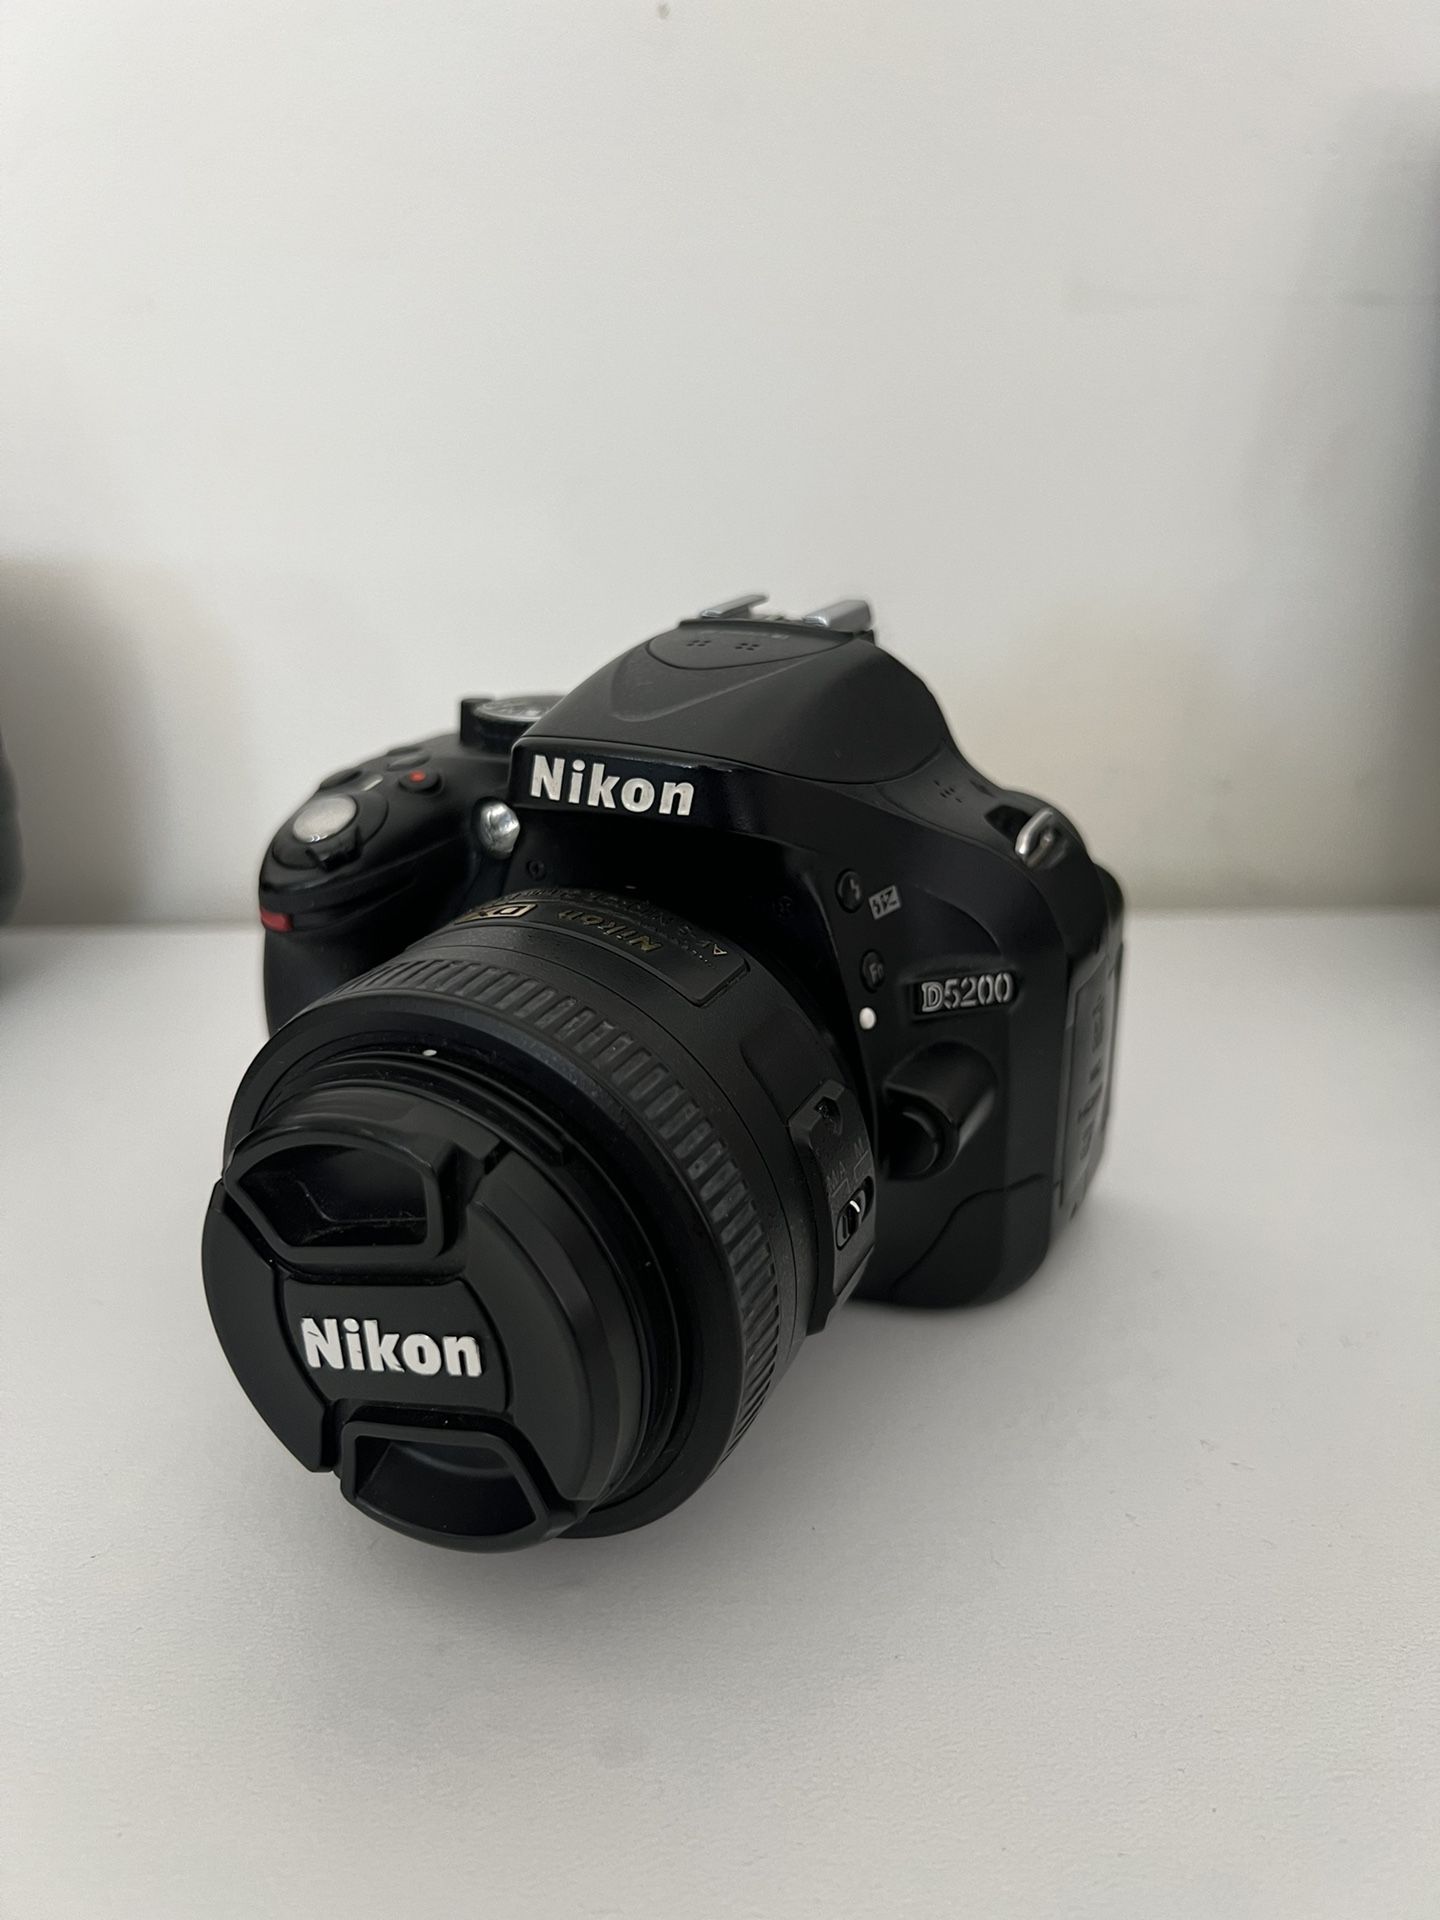 Nikon D5200 Camera (BUNDLE)